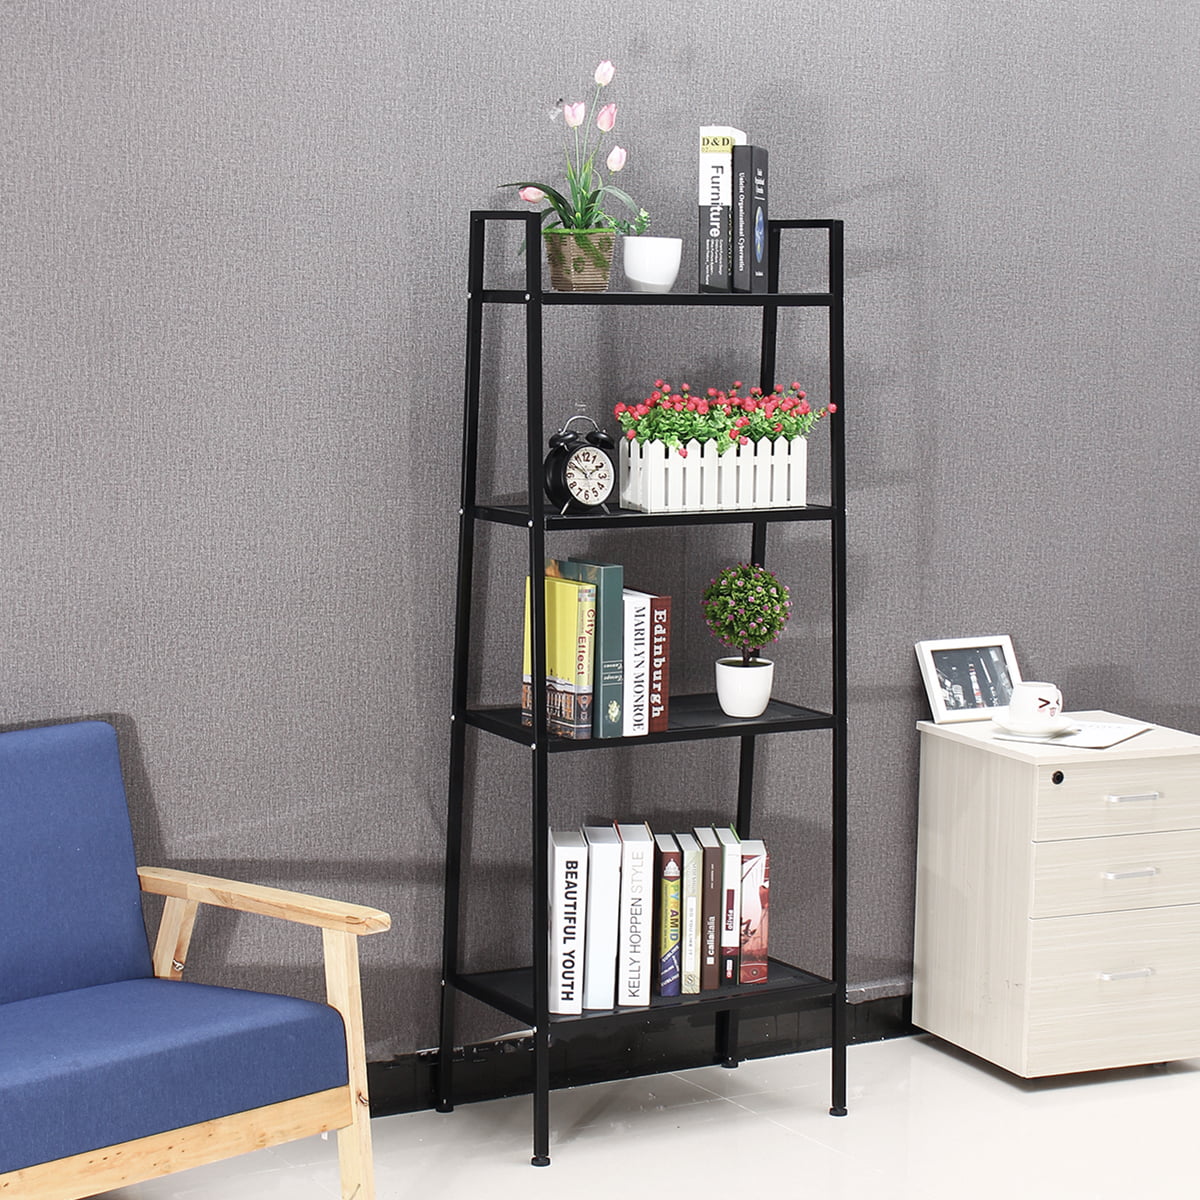 soges Shelf 60cm Storage Rack Bookcase Ladder shelf 4-Tier Bookshelf Standing Metal Display Shelf Plant Flower Stand,Black,LXH-TJ60B-RZR 